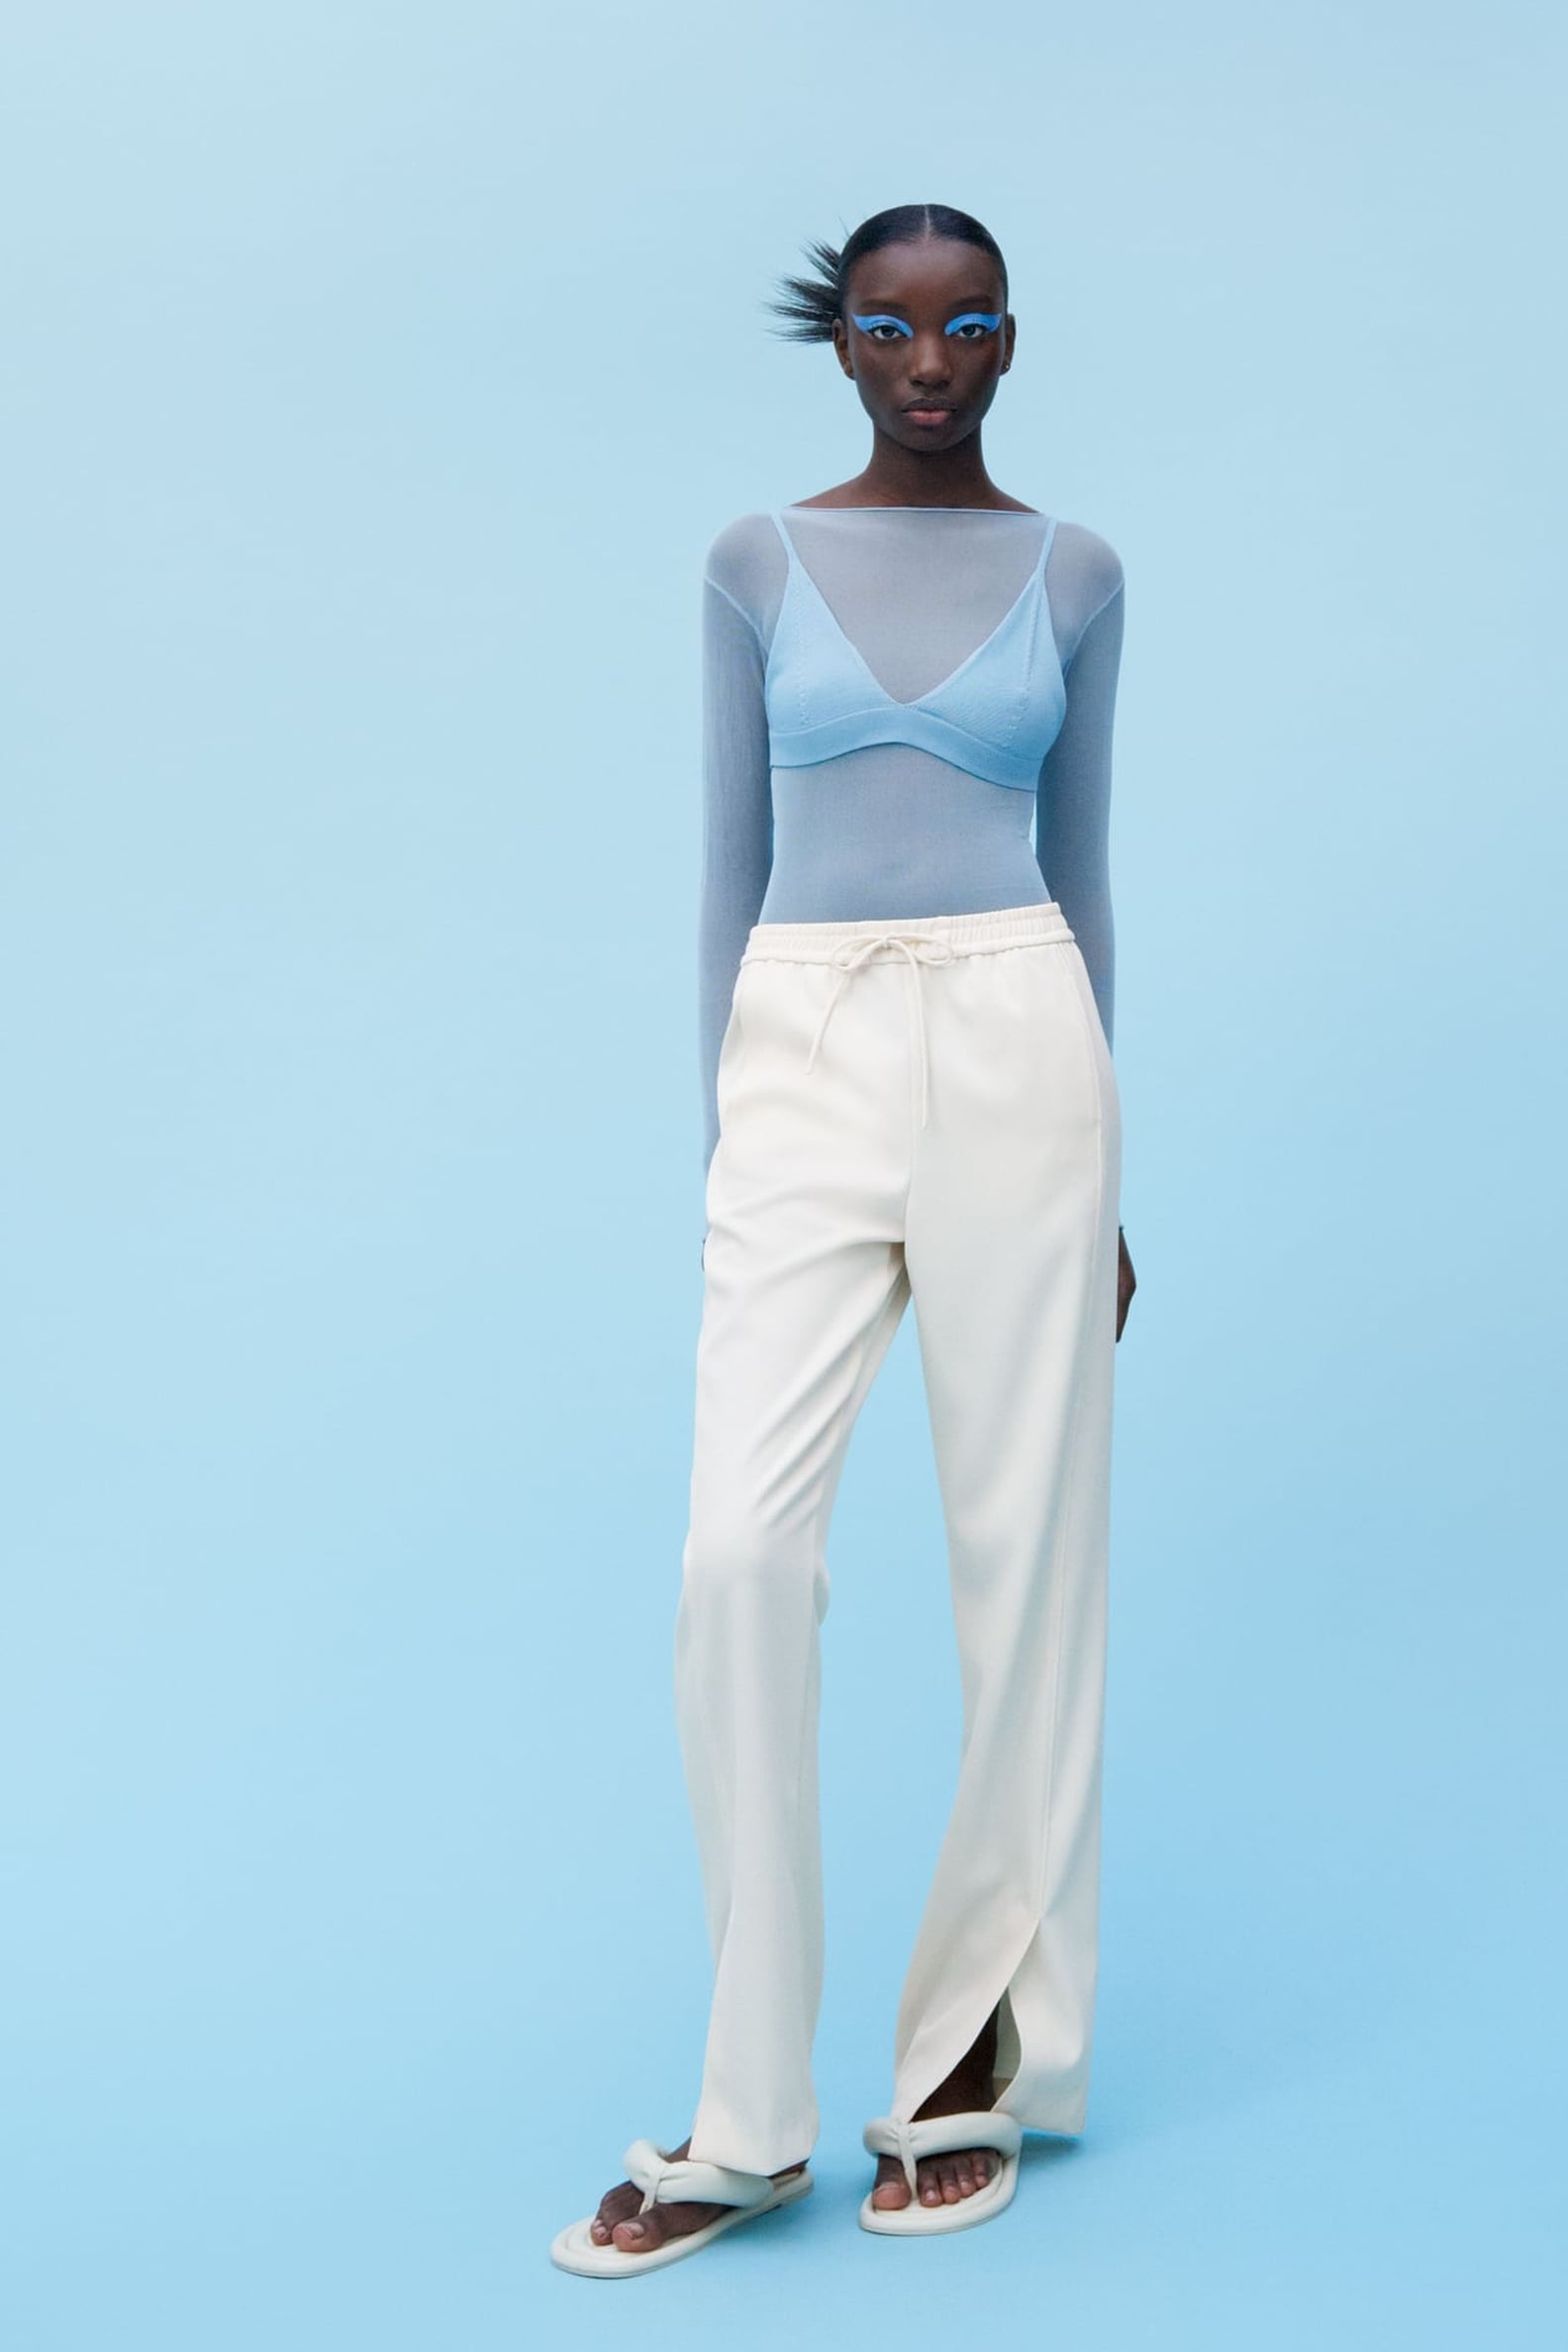 Best New Spring Clothes From Zara | March 2021 | POPSUGAR Fashion